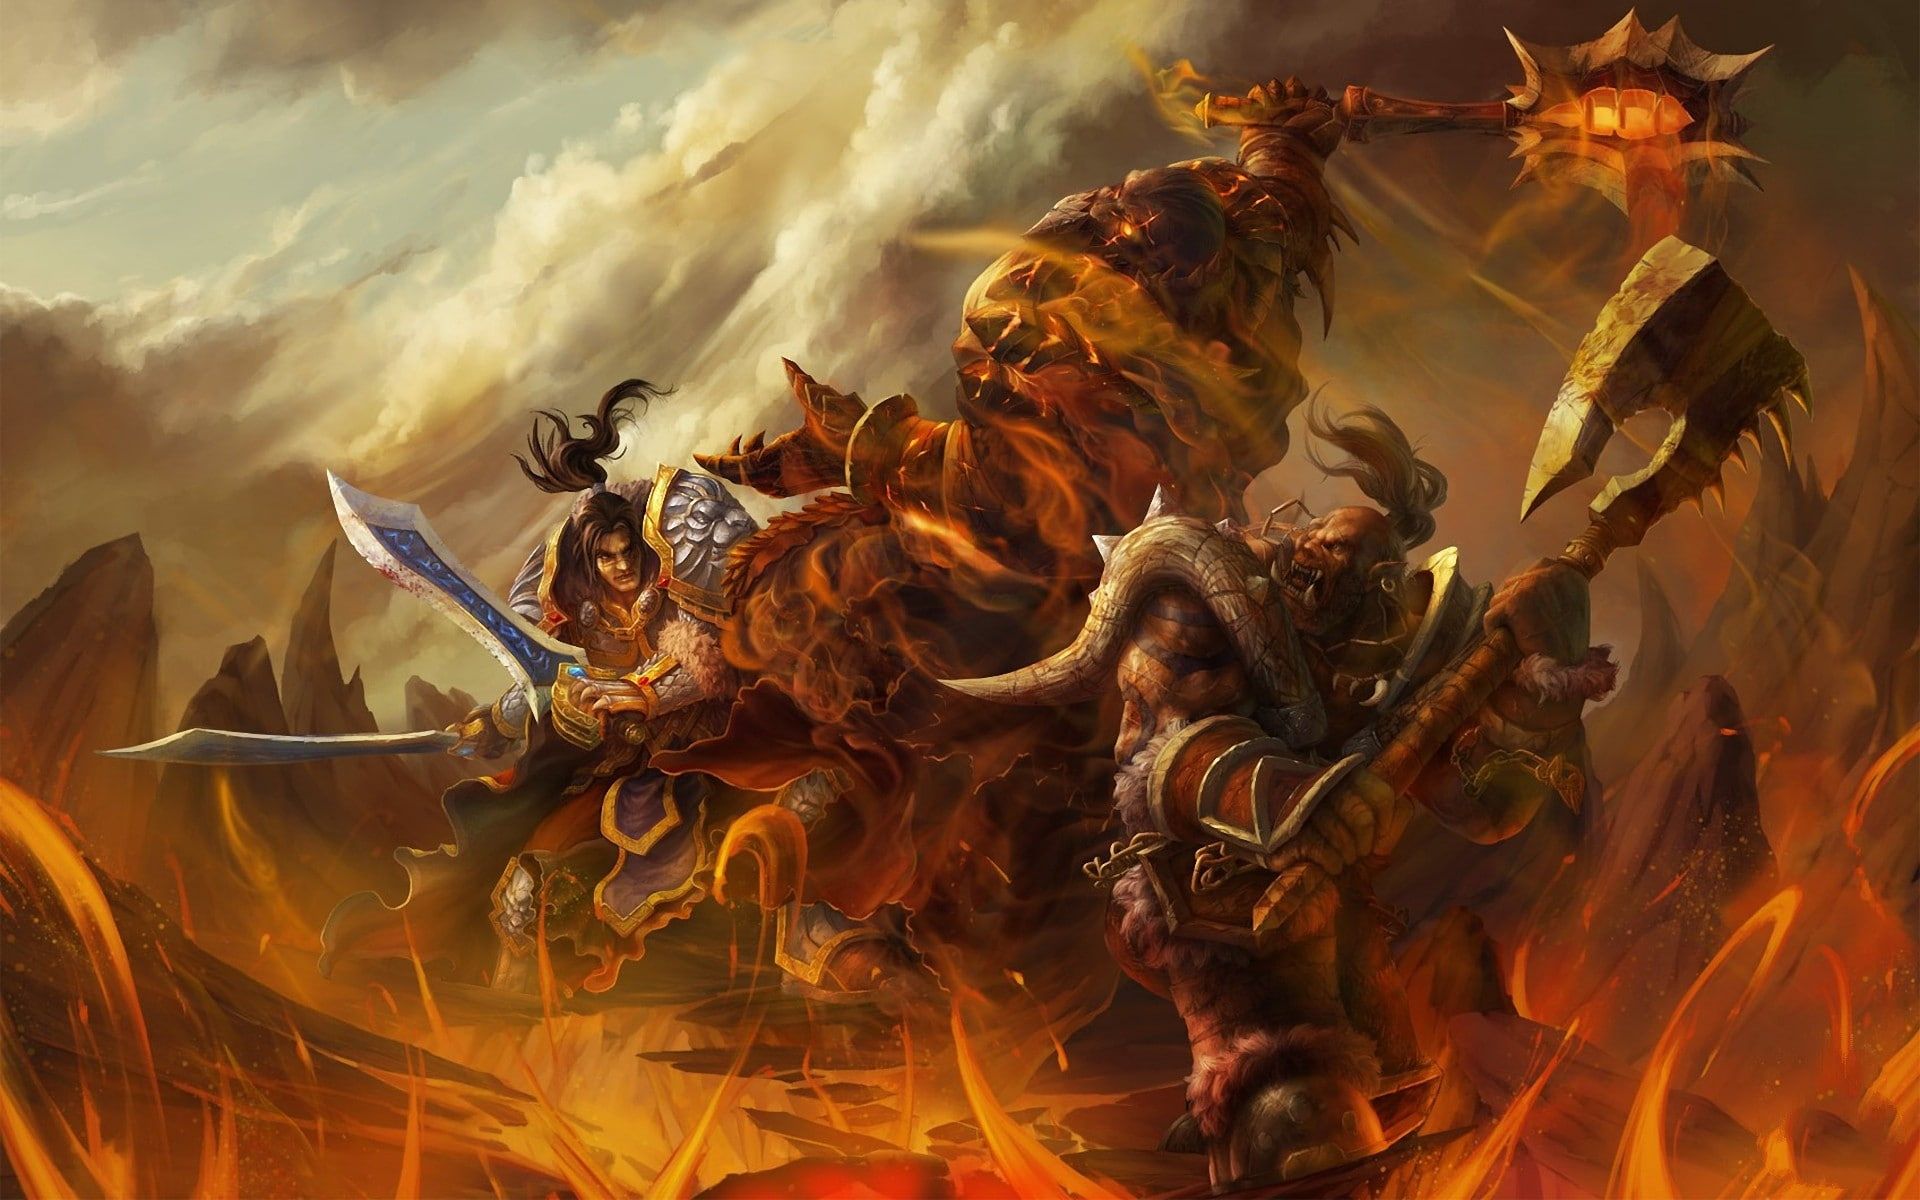 Warcraft #Deathwing Garrosh Hellscream King Varian Wrynn video games World of Warcraft P #wallpaper #hdwall. World of warcraft, Warcraft, Garrosh hellscream